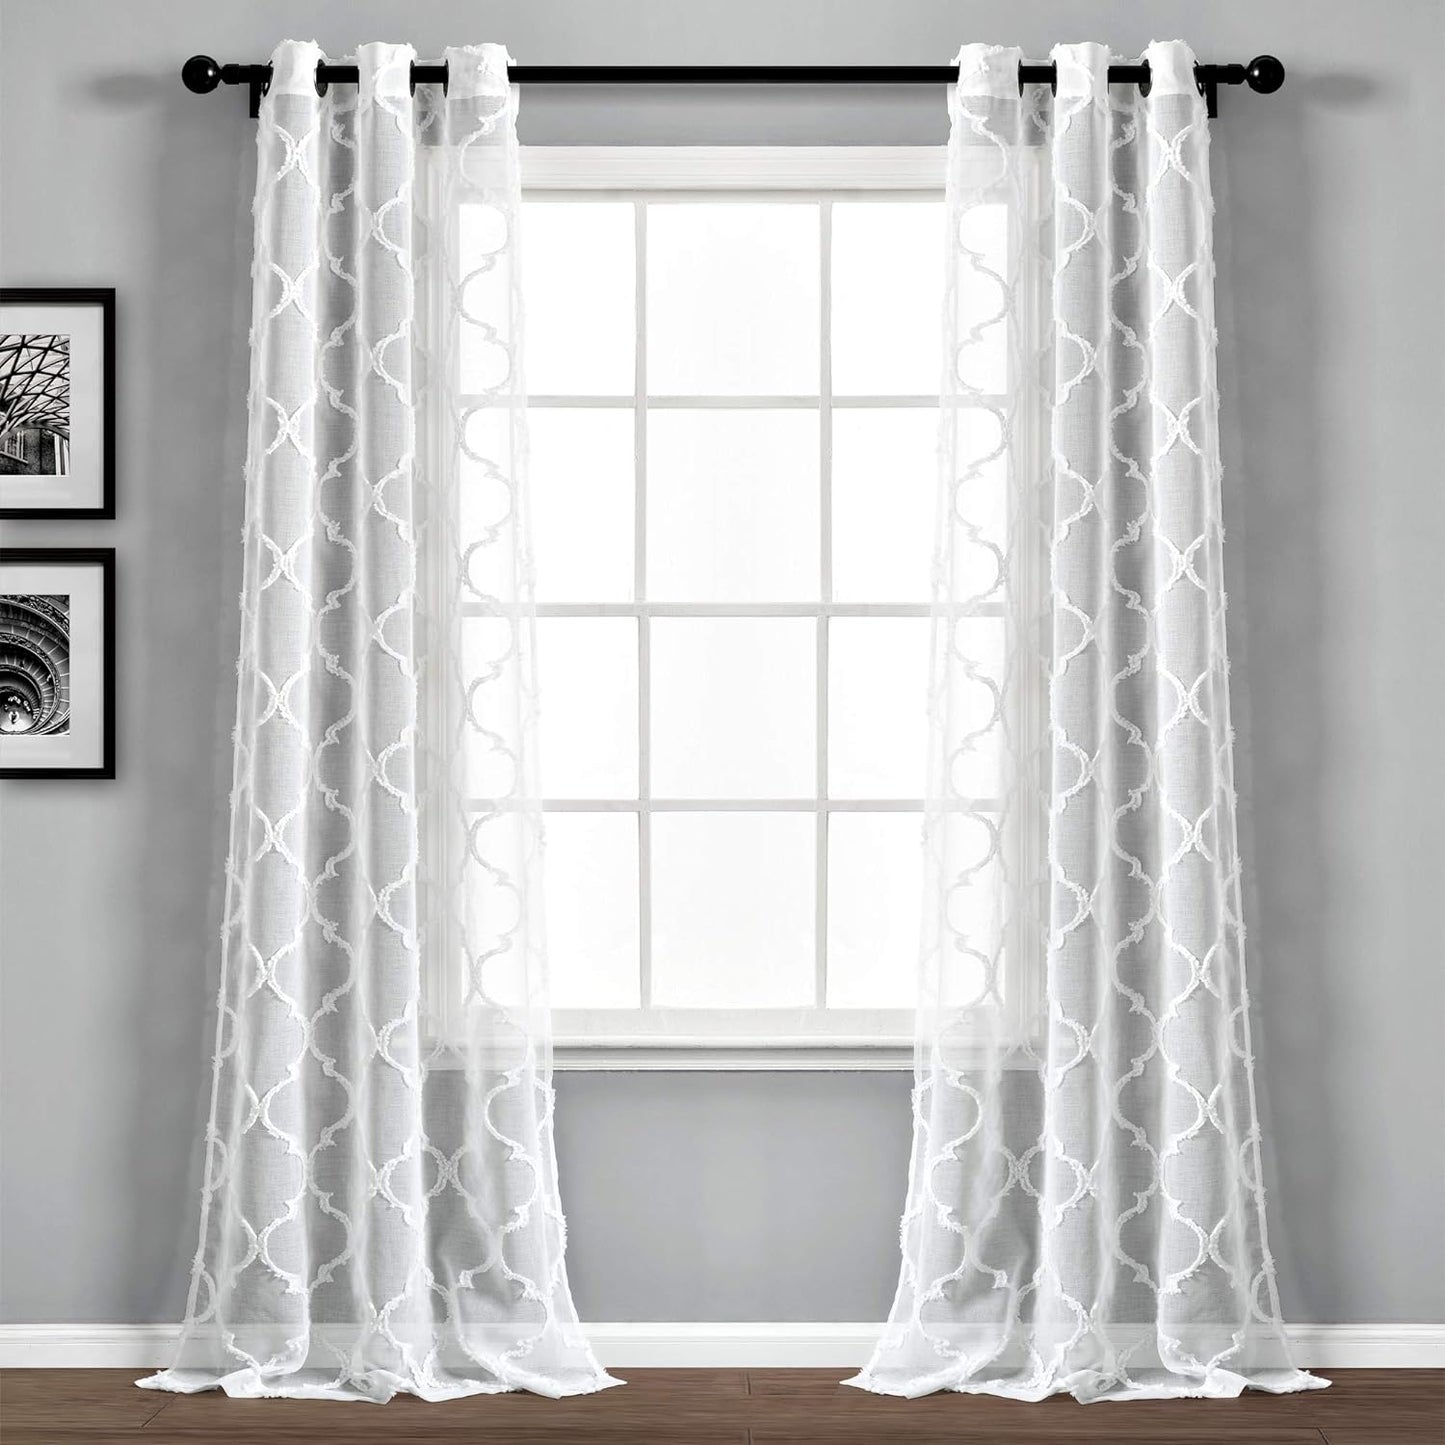 Lush Decor Navy Avon Trellis Grommet Sheer Window Curtain Panel Pair (84" X 38")  Triangle Home Fashions White 38"W X 95"L 